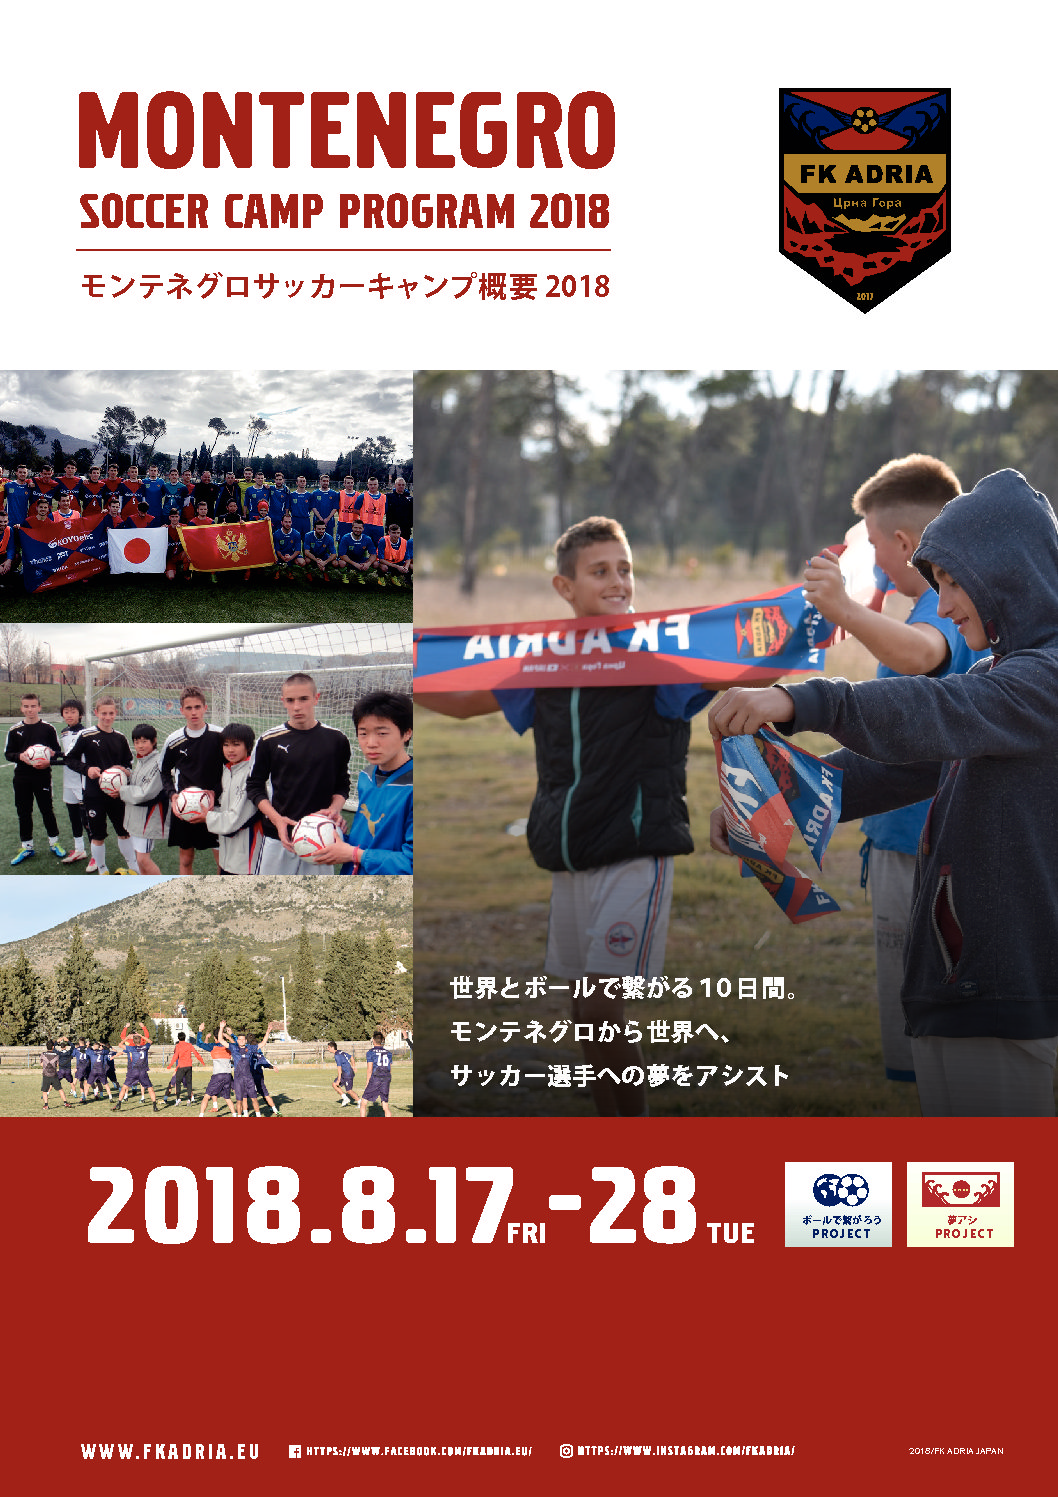 SOCCER CAMP PROGRAM 2018 in MONTENEGRO 〜 サッカーサマーキャンプinモンテネグロ（対象は小学5年生から中学3年生）